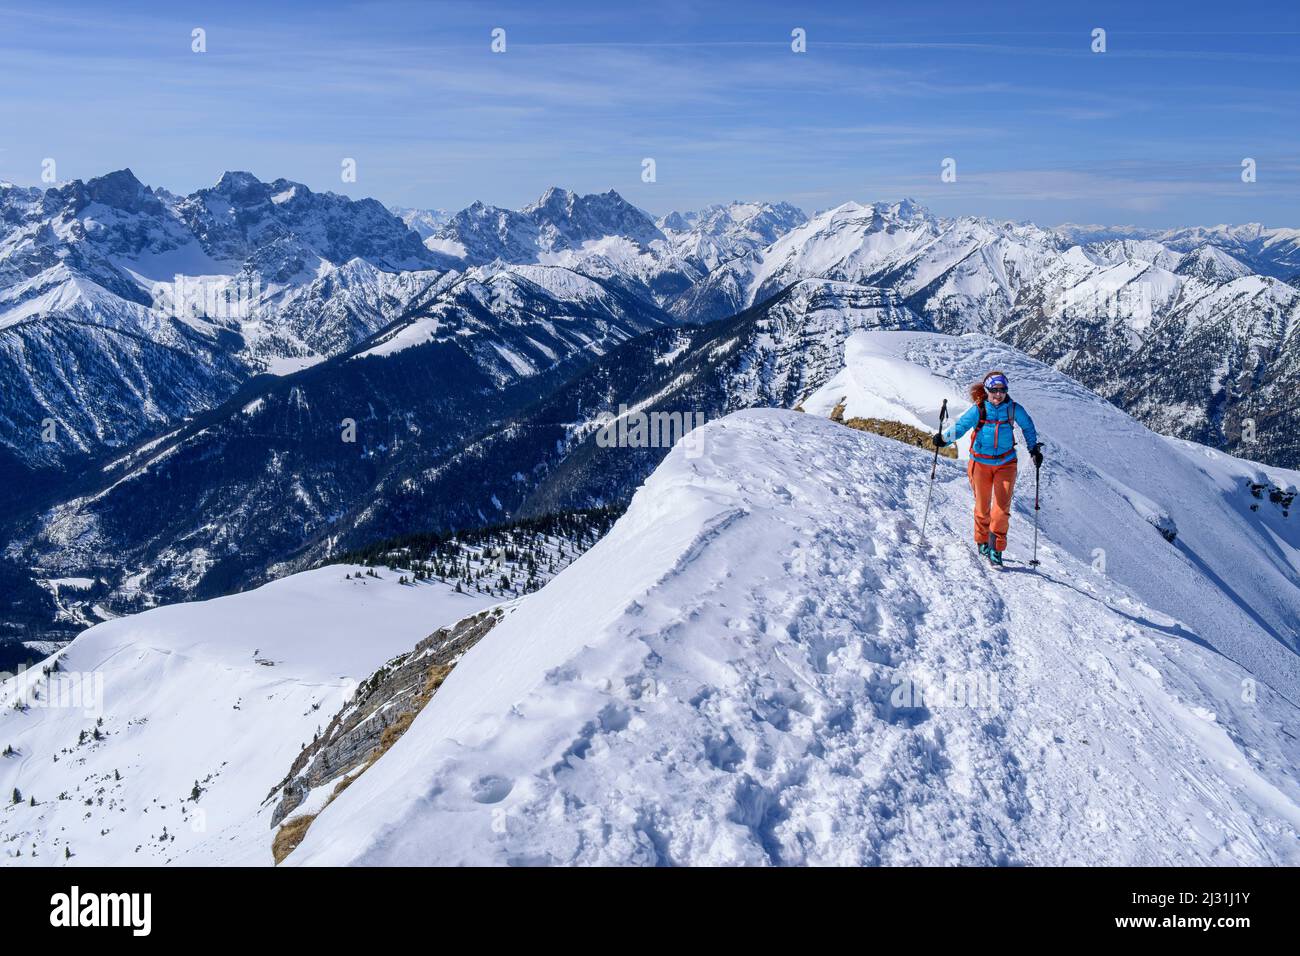 La donna in ski tour sale fino a Schafreiter a piedi su cresta di neve, Karwendel, alta Baviera, Baviera, Germania Foto Stock